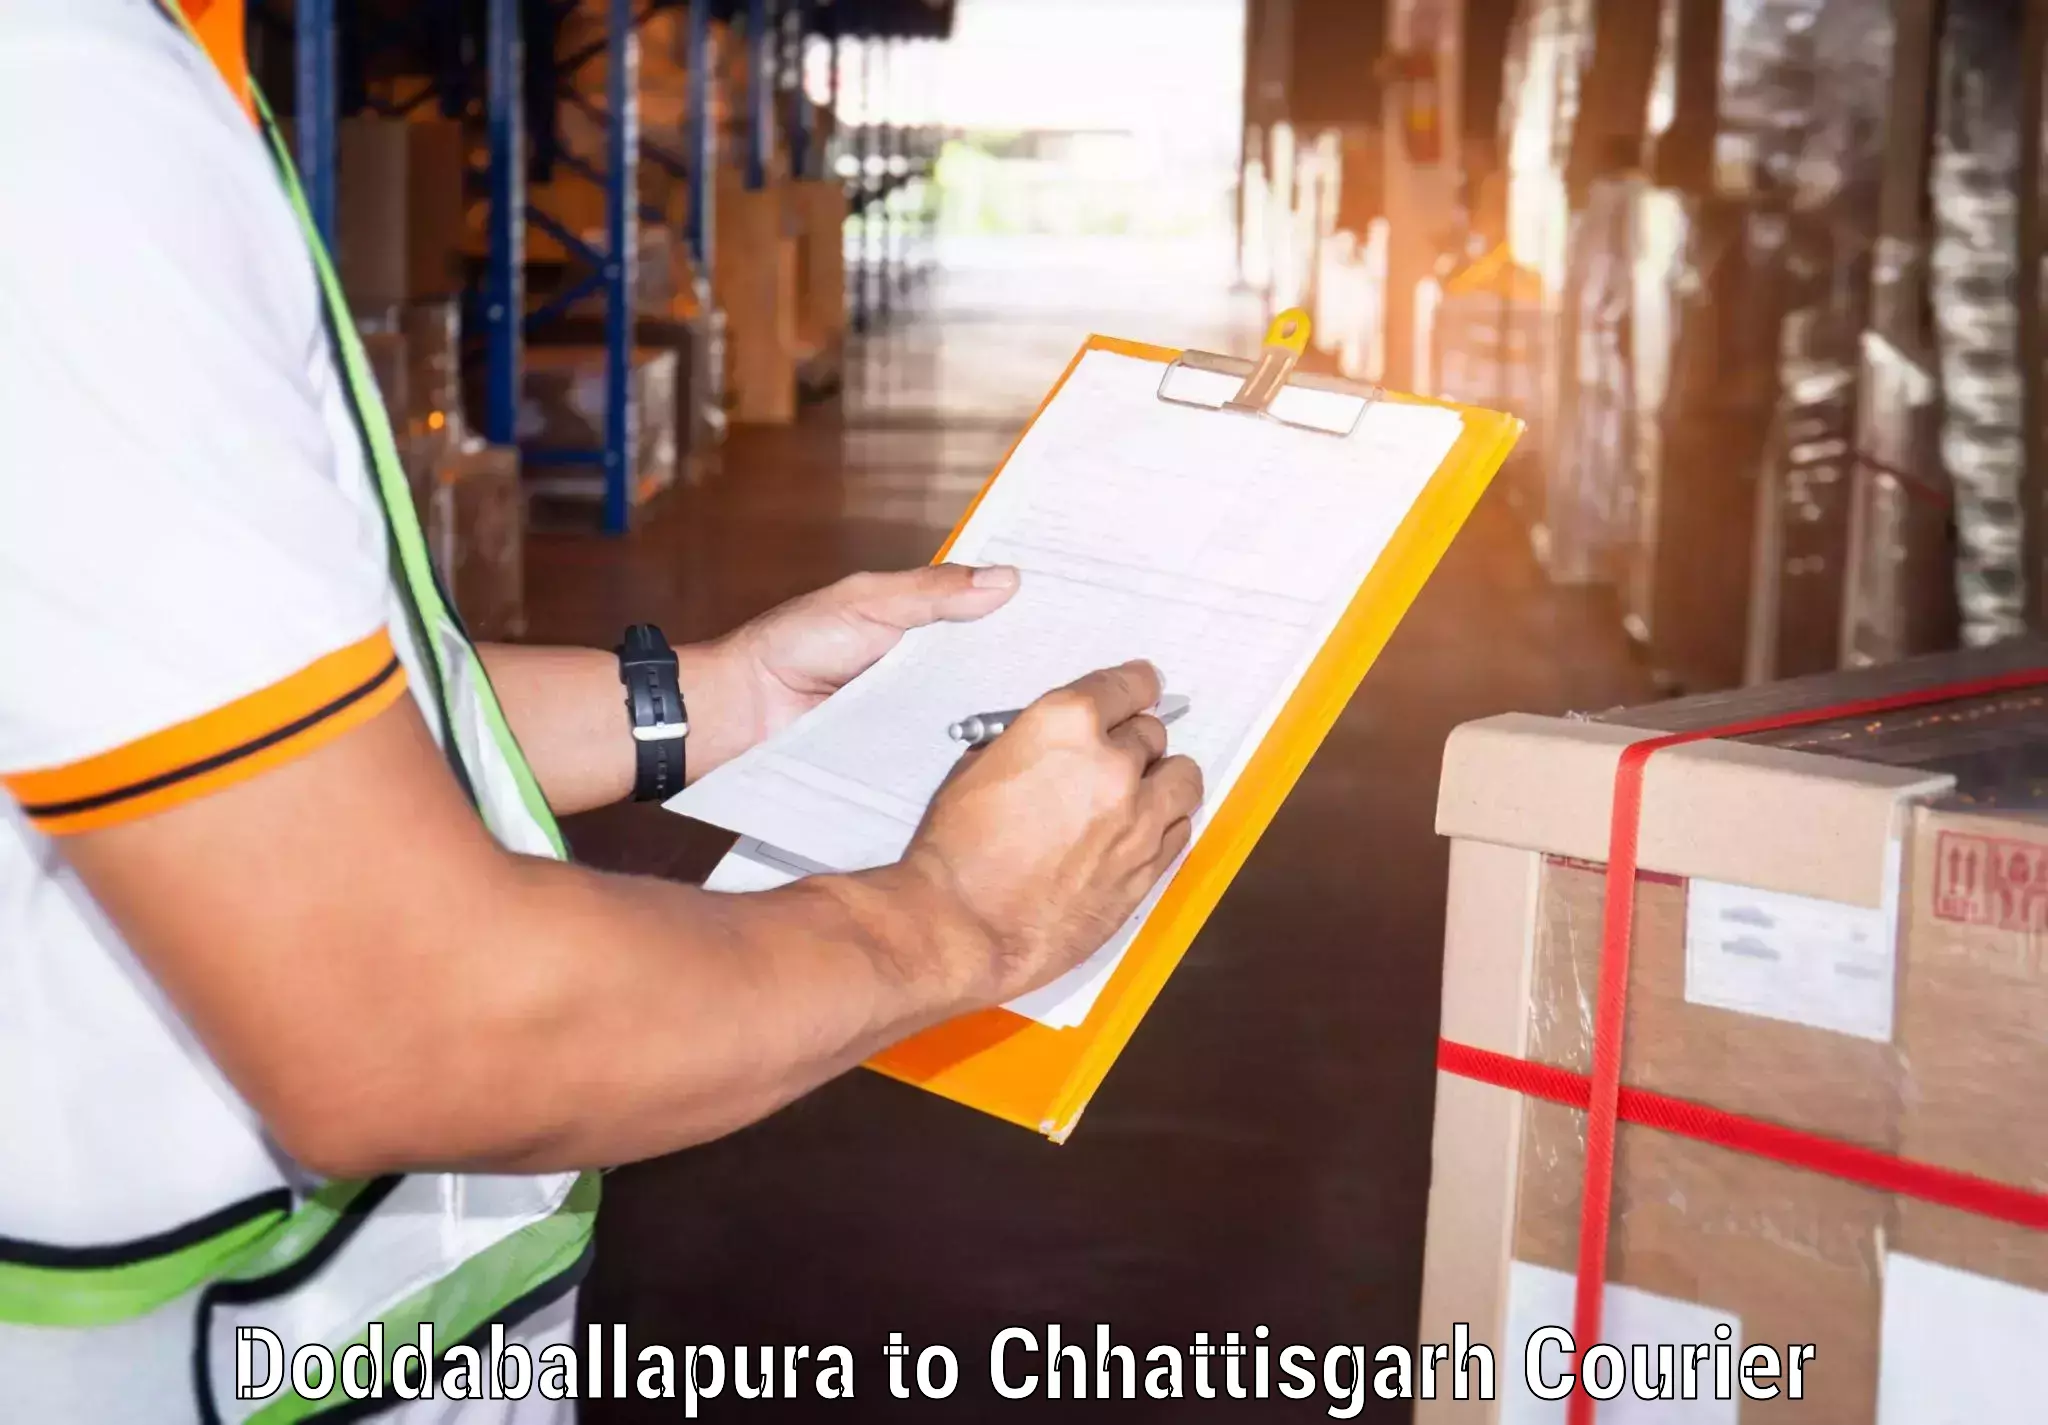 Package delivery network Doddaballapura to Bijapur Chhattisgarh